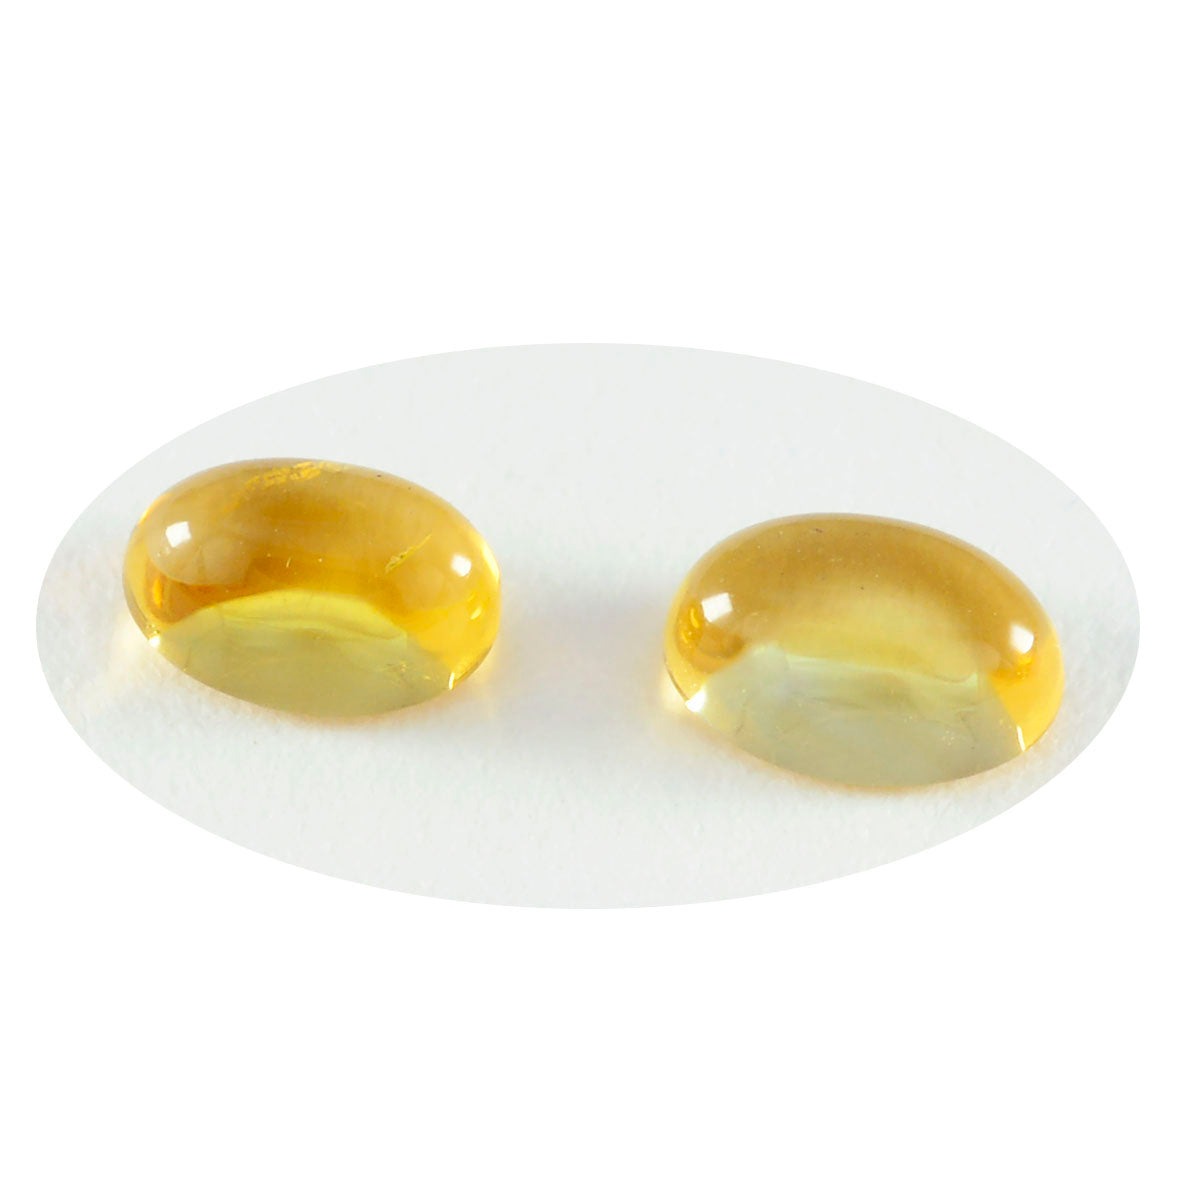 Riyogems 1PC Yellow Citrine Cabochon 9x11 mm Oval Shape excellent Quality Gemstone